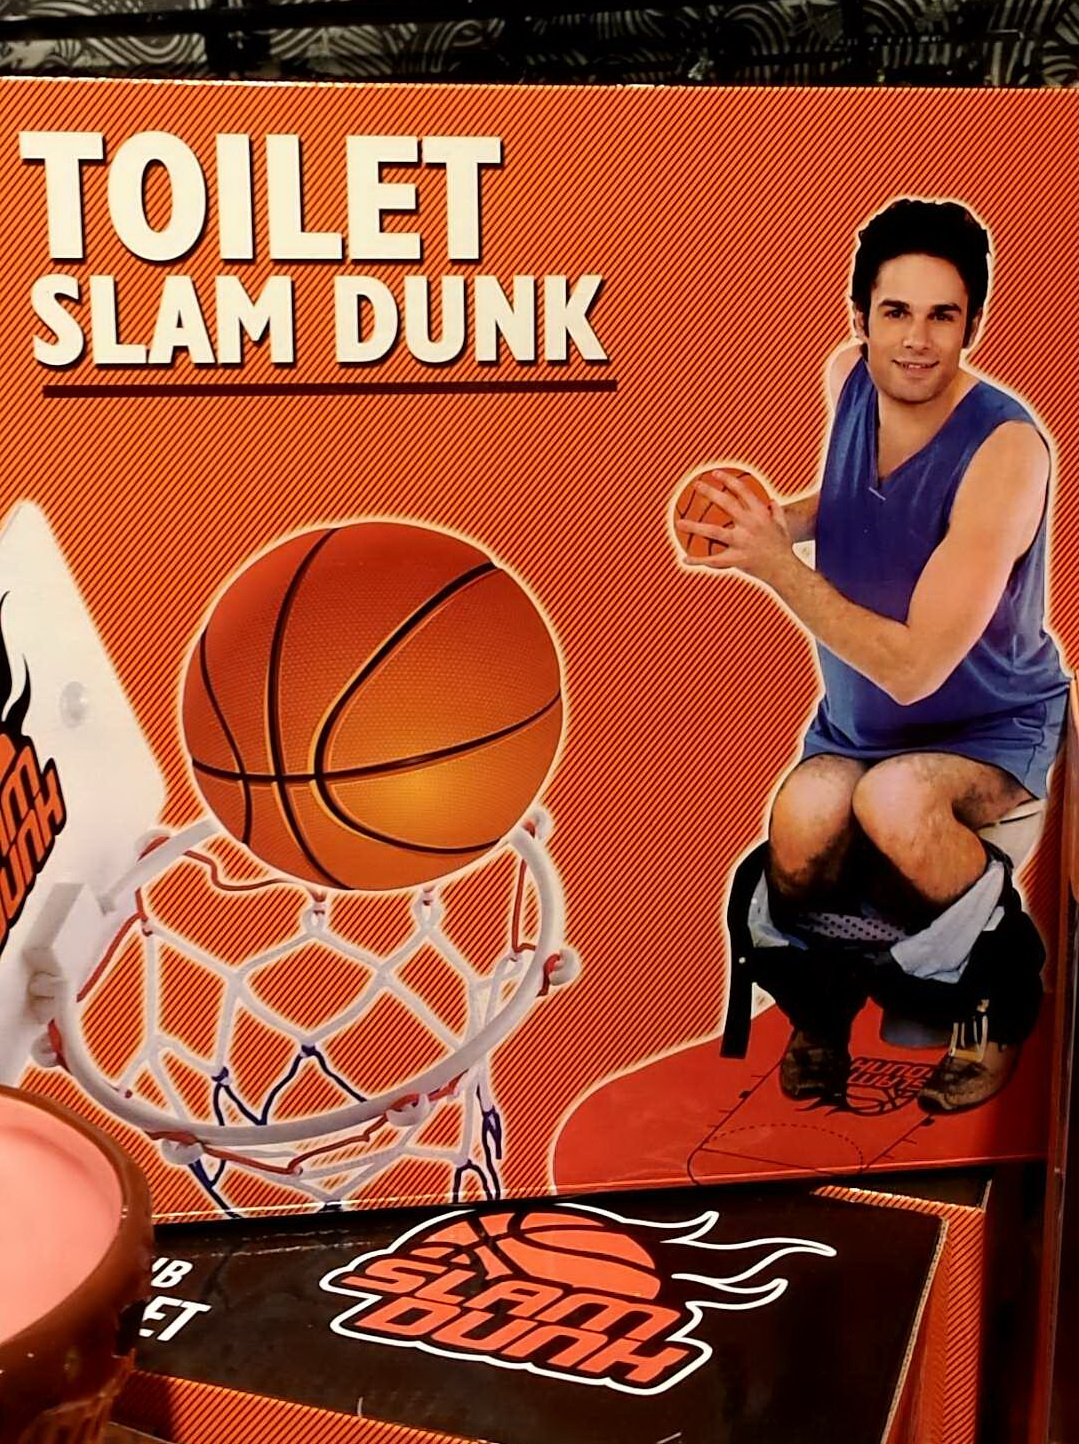 random toilet basketball set - Toilet Slam Dunk yo